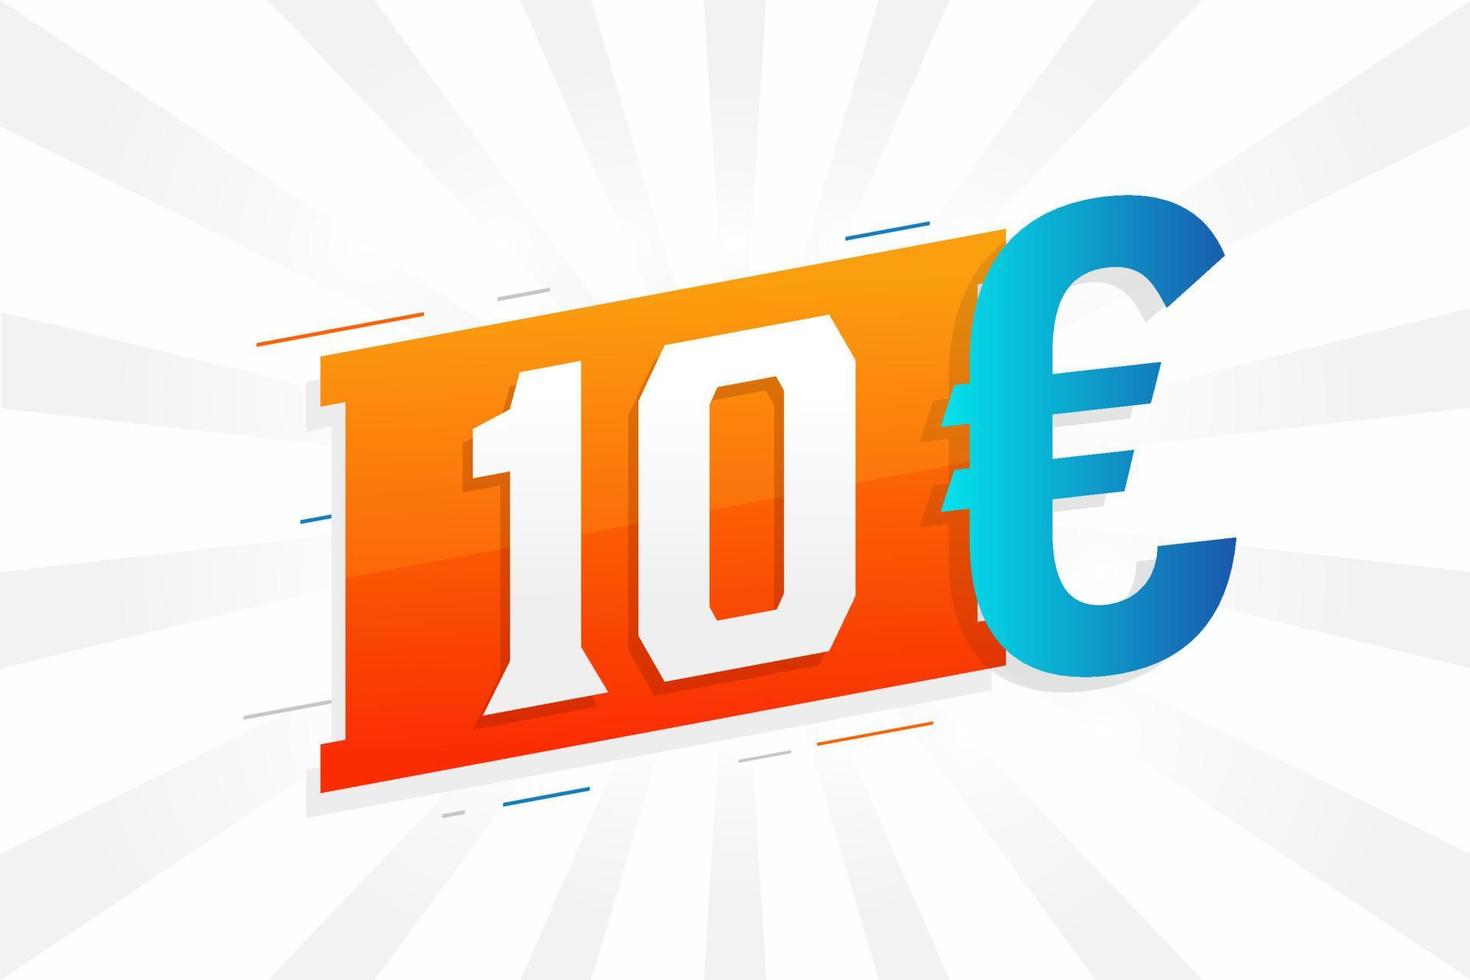 Símbolo de texto vectorial de moneda de 10 euros. 10 euros dinero de la unión europea stock vector